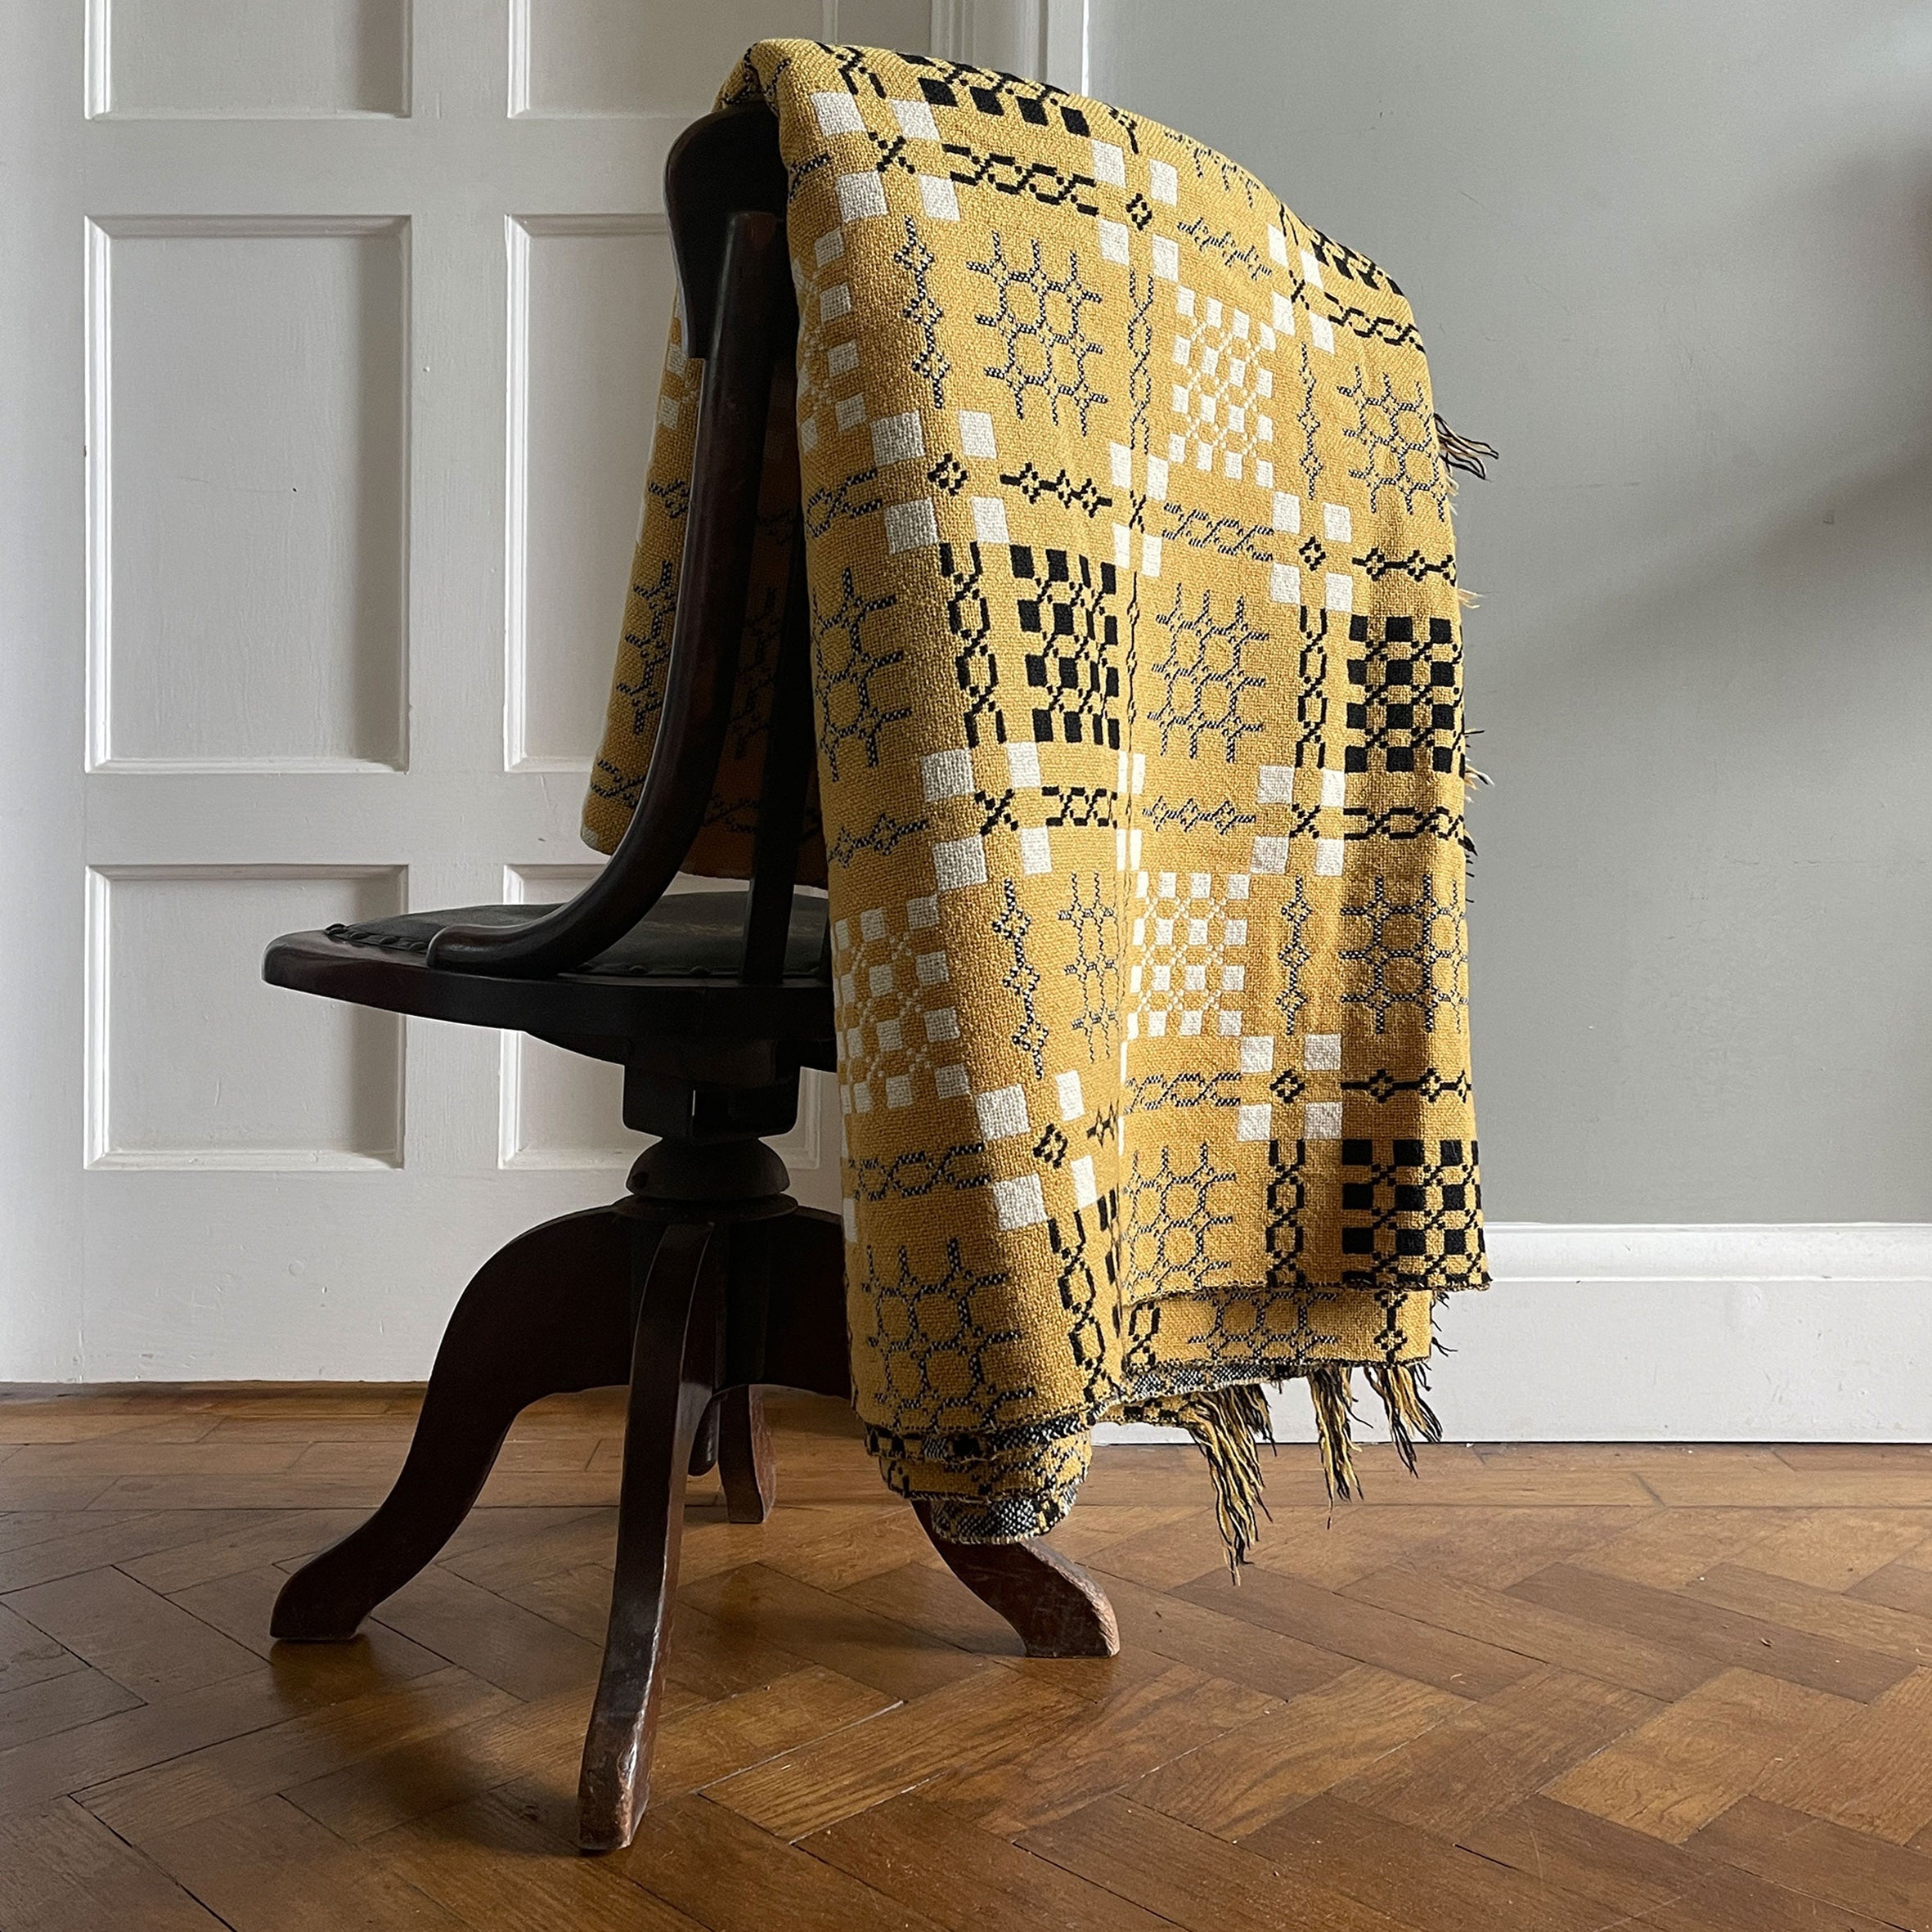 A Vintage Pure Wool Welsh Tapestry Blanket